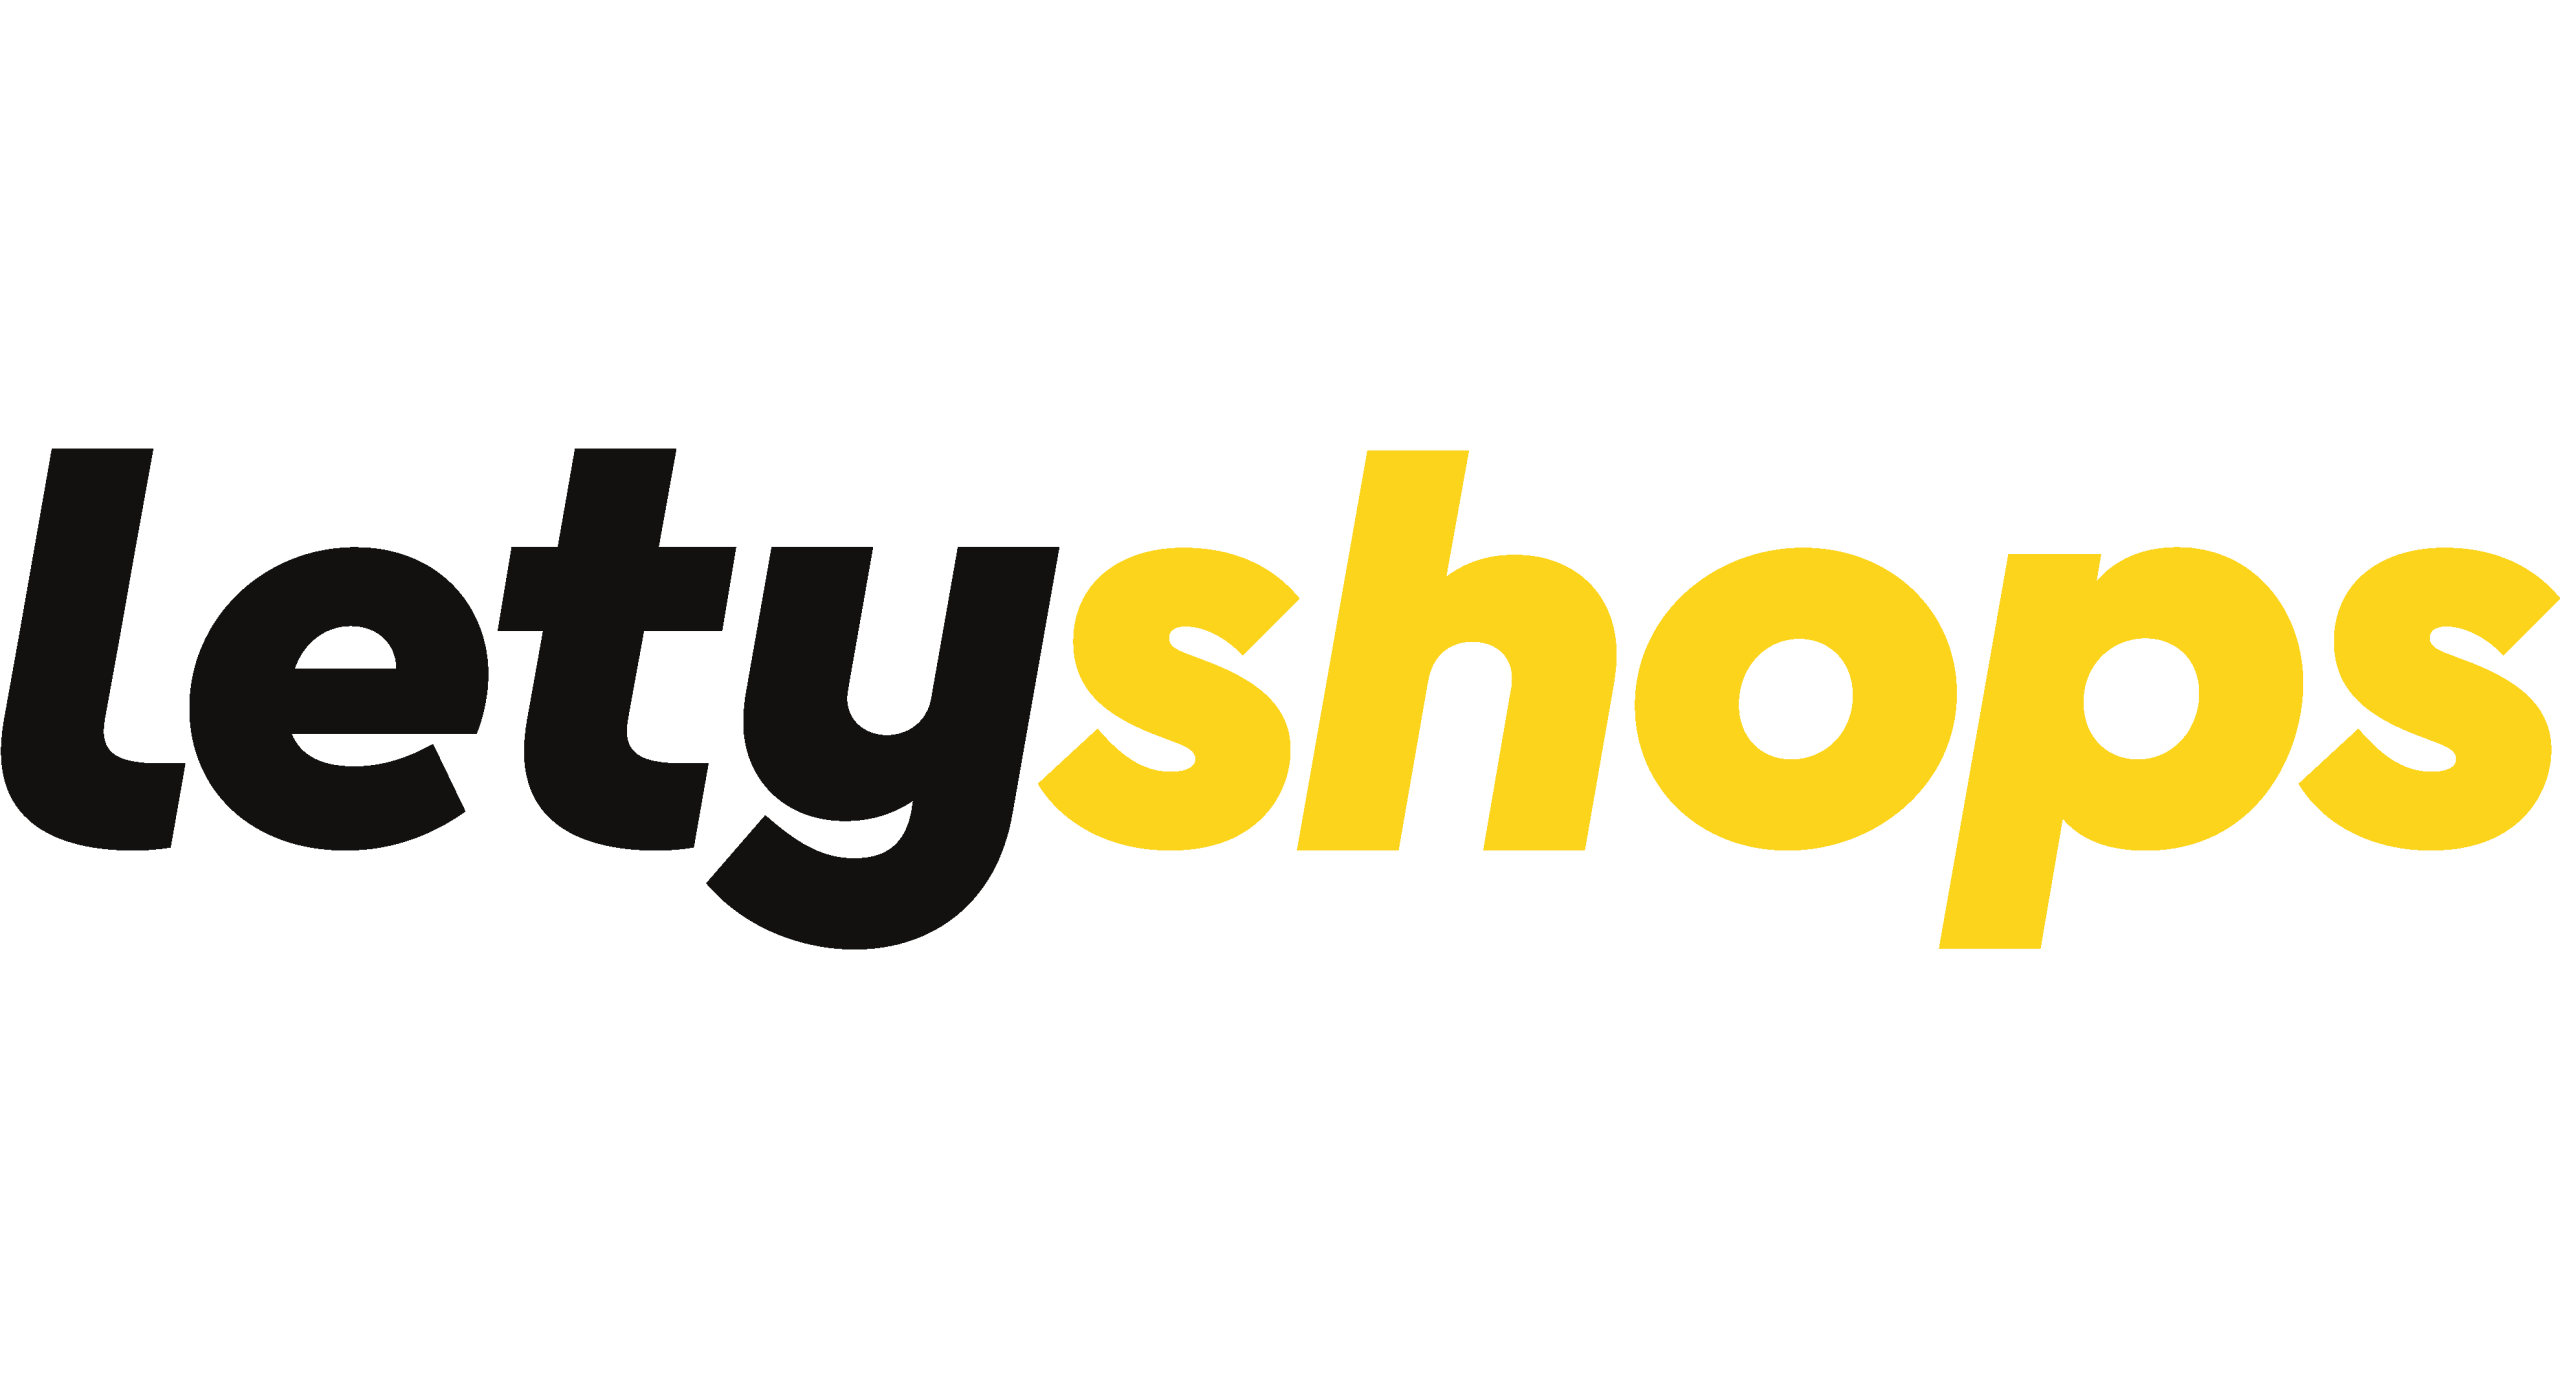 LetyShops Brand Image